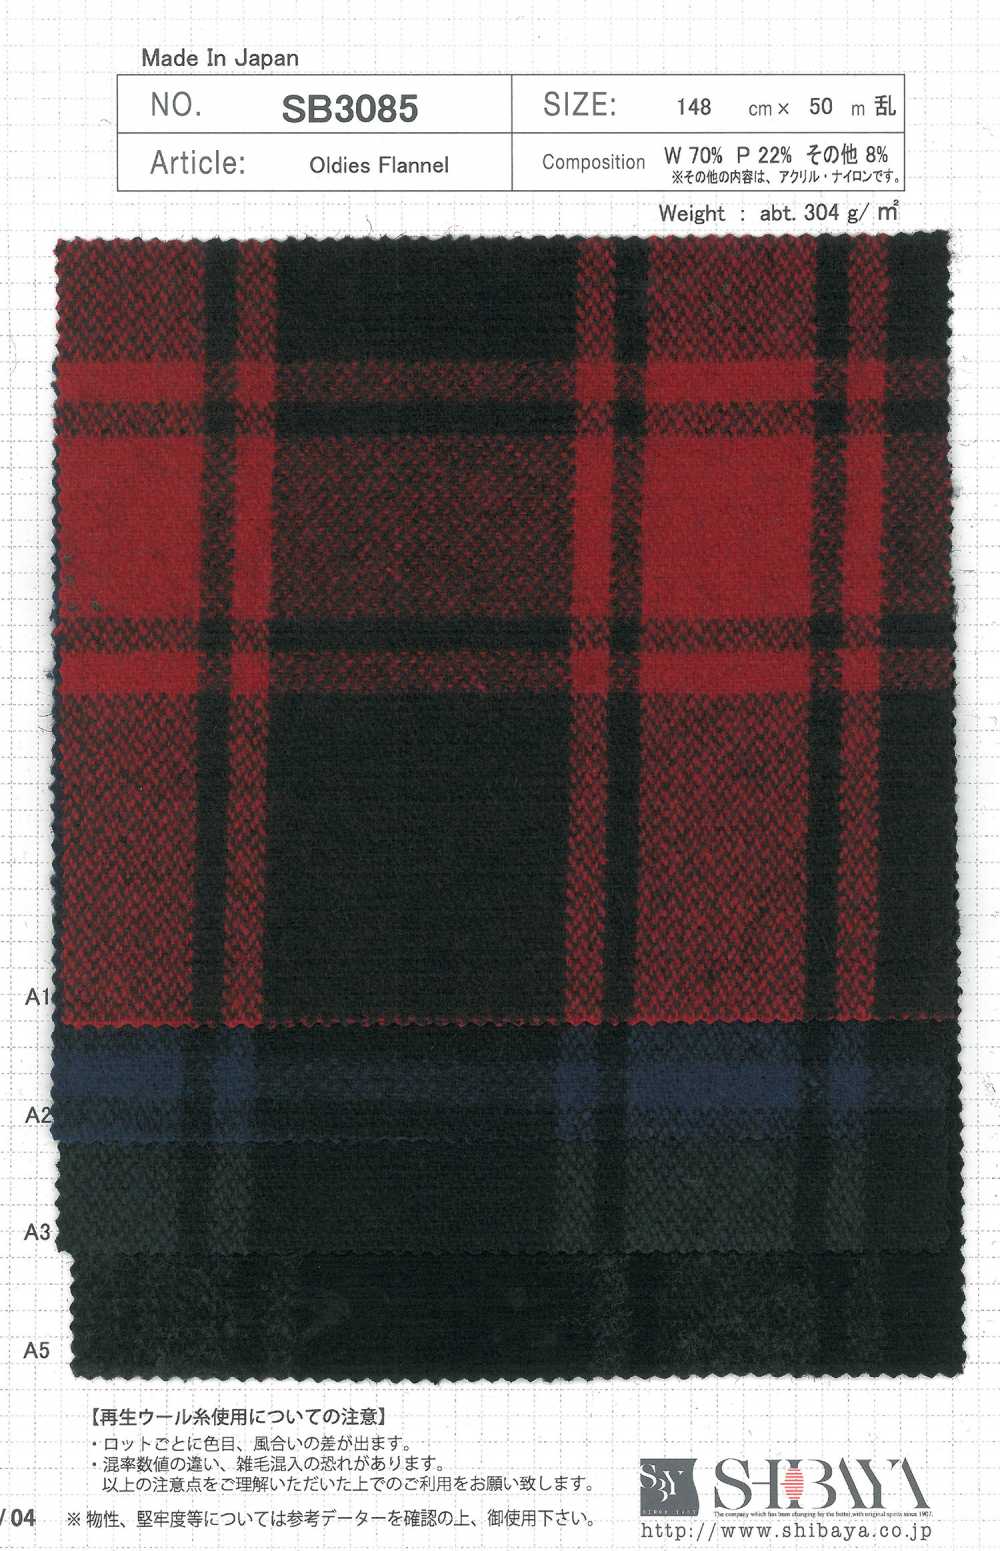 SB3085 Oldies Flannel[Textile / Fabric] SHIBAYA